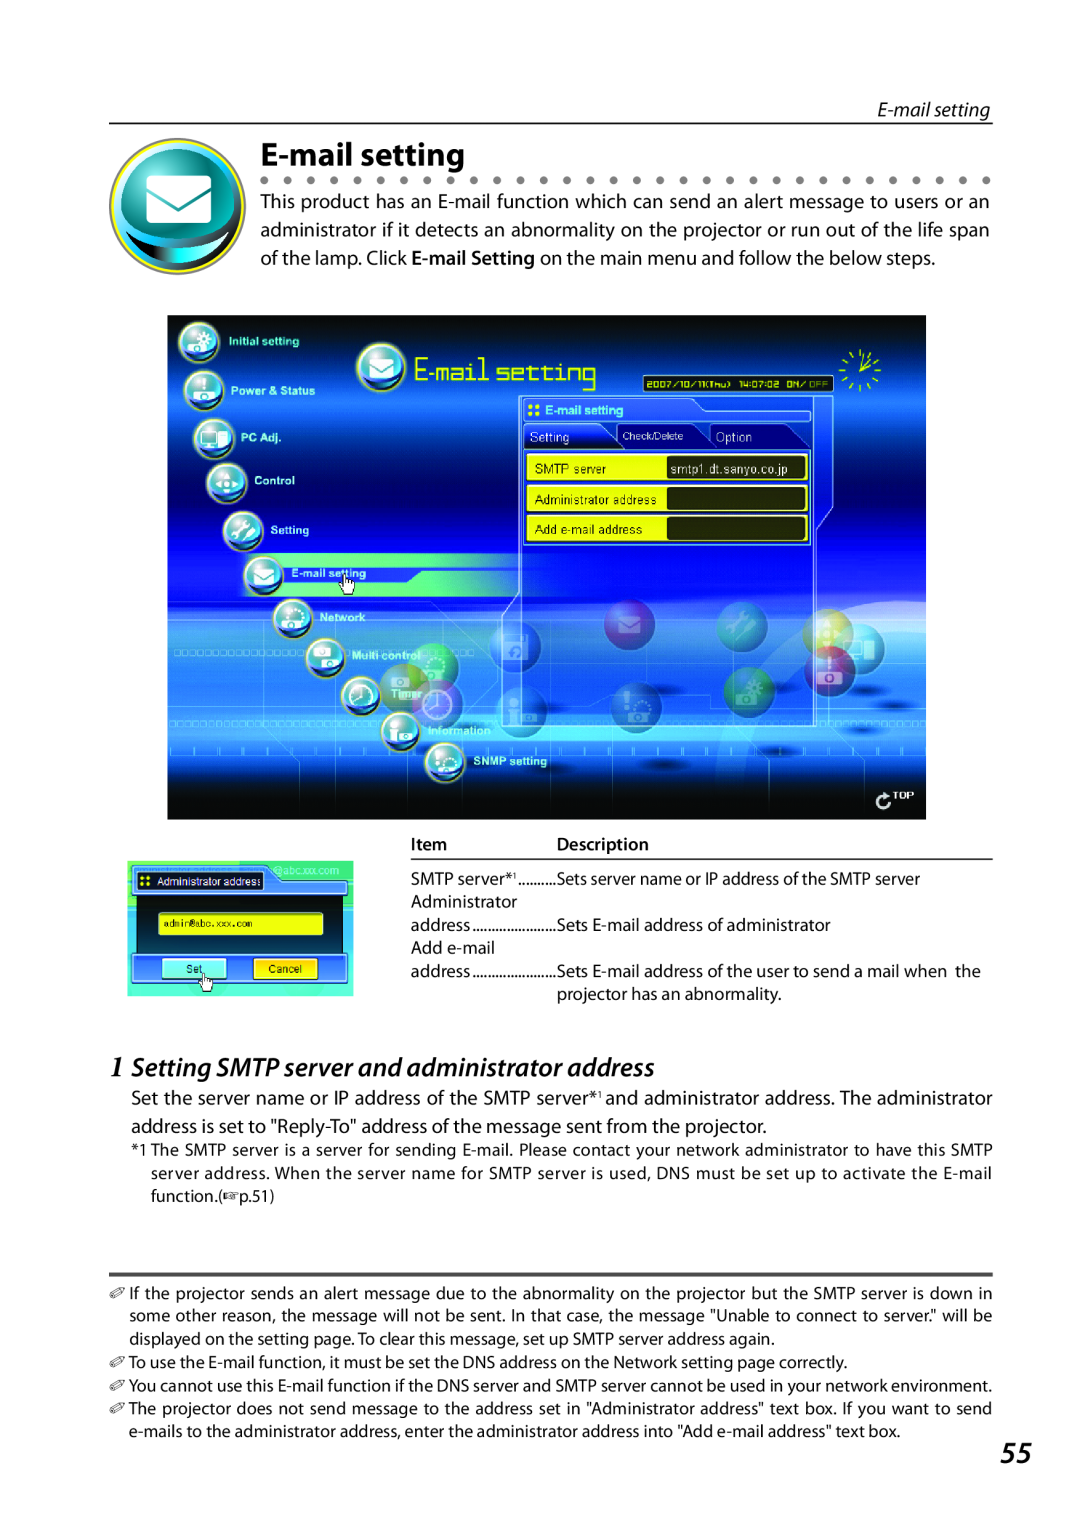 Sanyo PLCXL51 E-mailsetting, 1Setting SMTP server and administrator address, Item, Description, Administrator, Add e-mail 